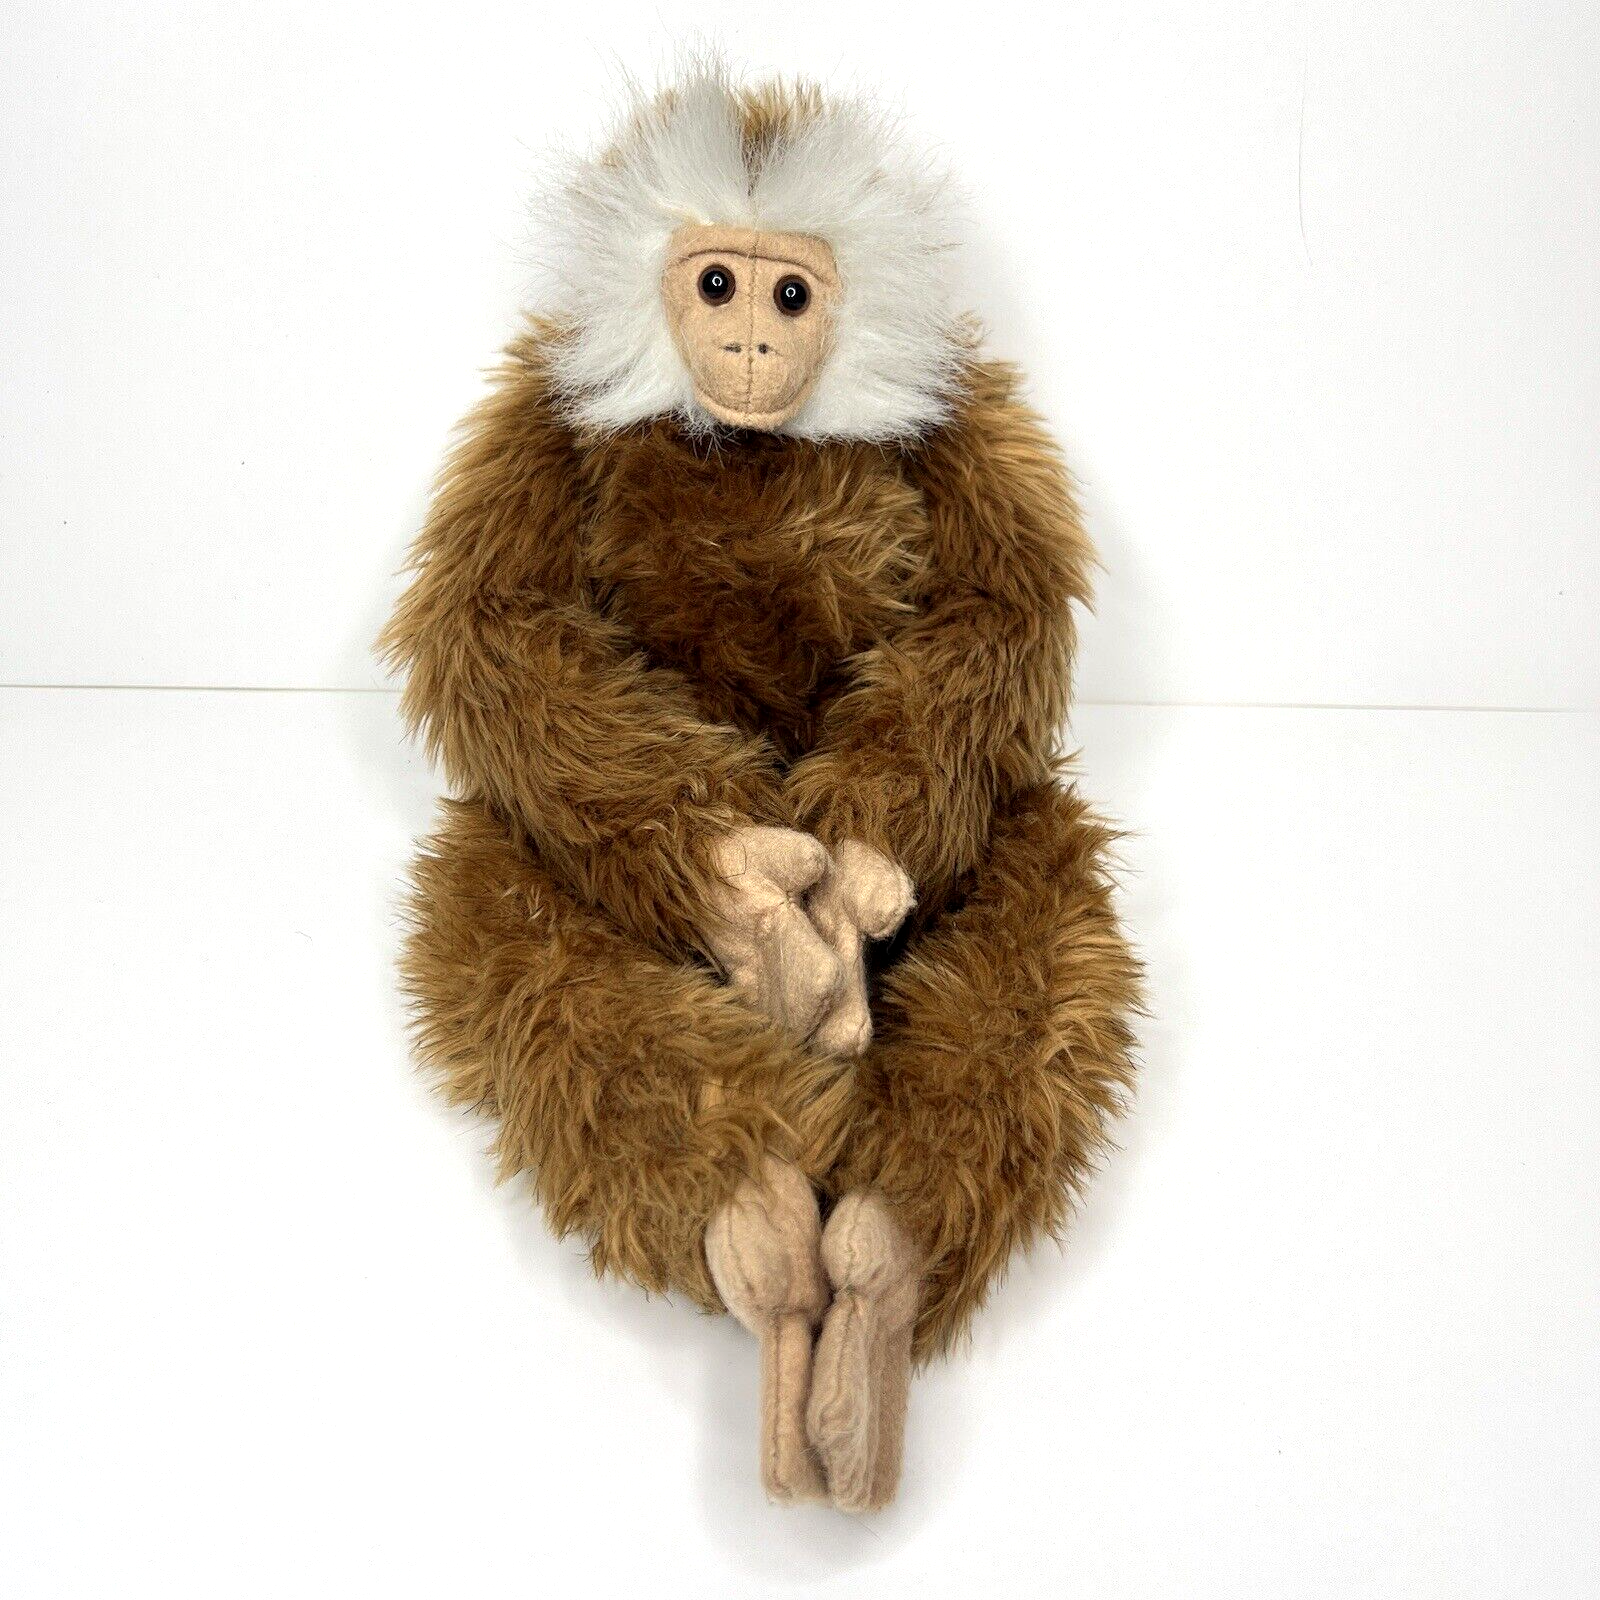 Primary image for Hugger Hang Monkey Plush Brown Vintage K&M Stuffed Animal Wild Republic 2001 20"